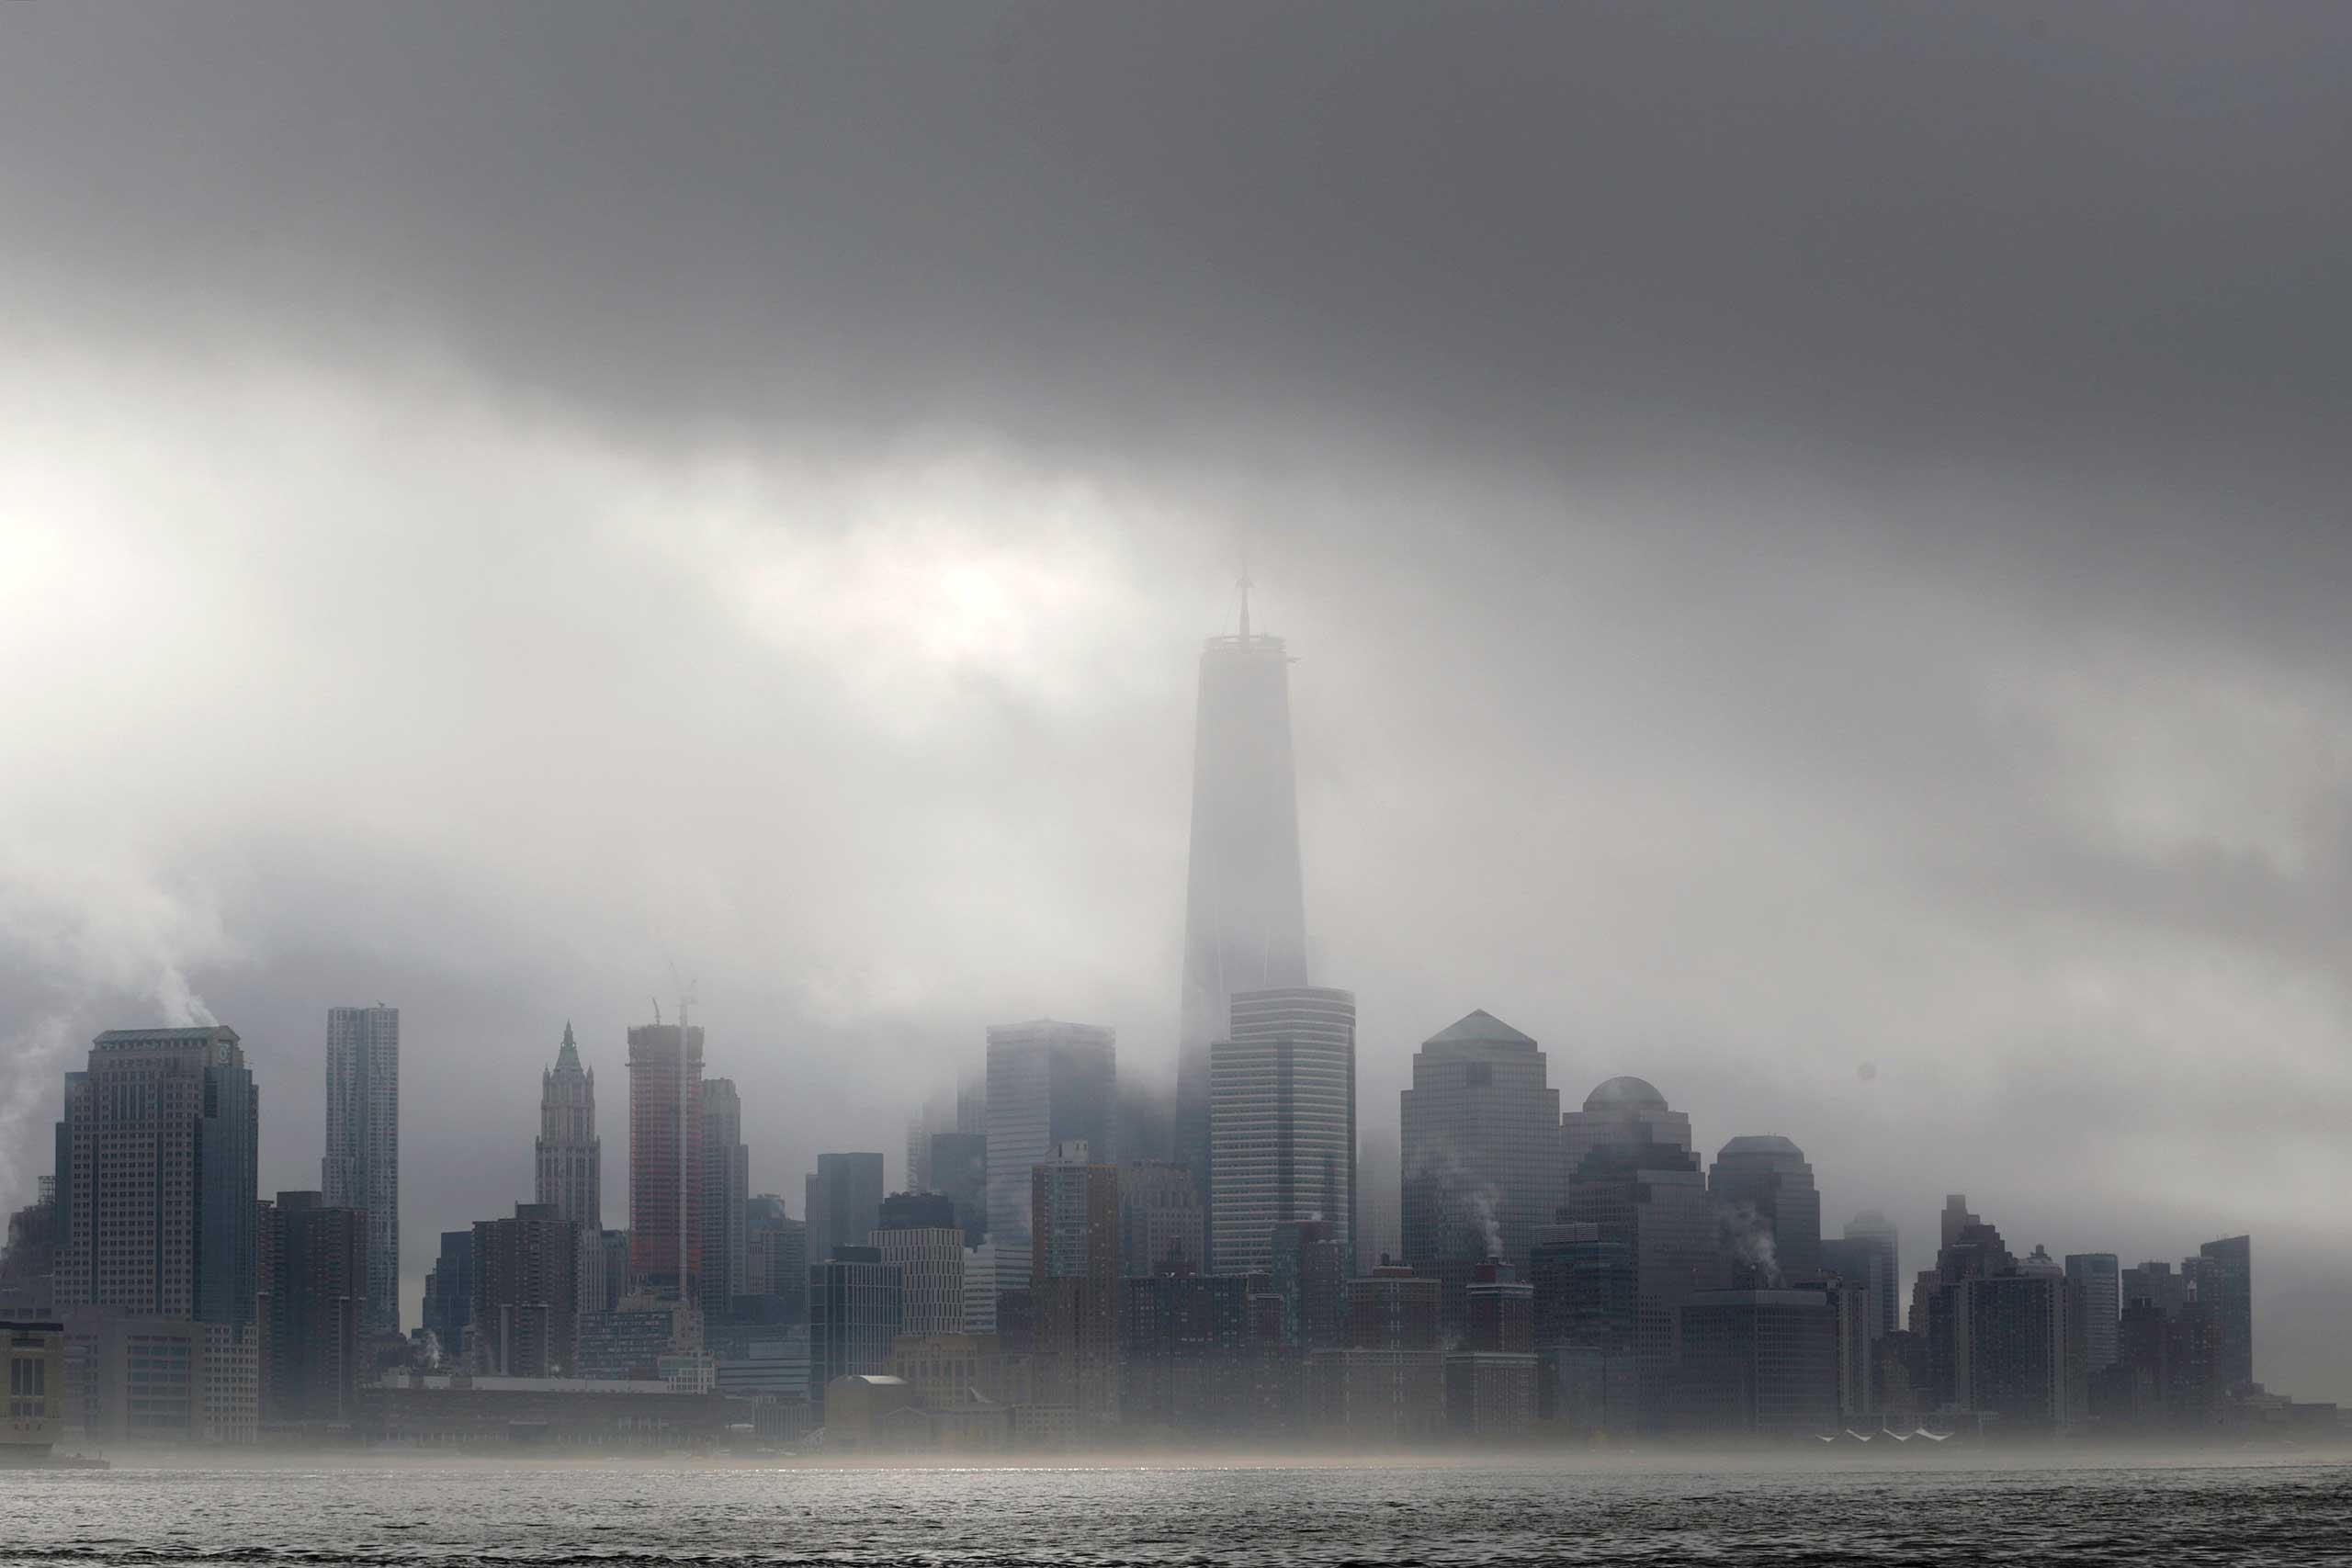 Heavy fog blankets lower Manhattan in New York, including One World Trade Center, center, in this view across the Hudson River from Hoboken, N.J., Nov. 12, 2014. (Julio Cortez—AP)